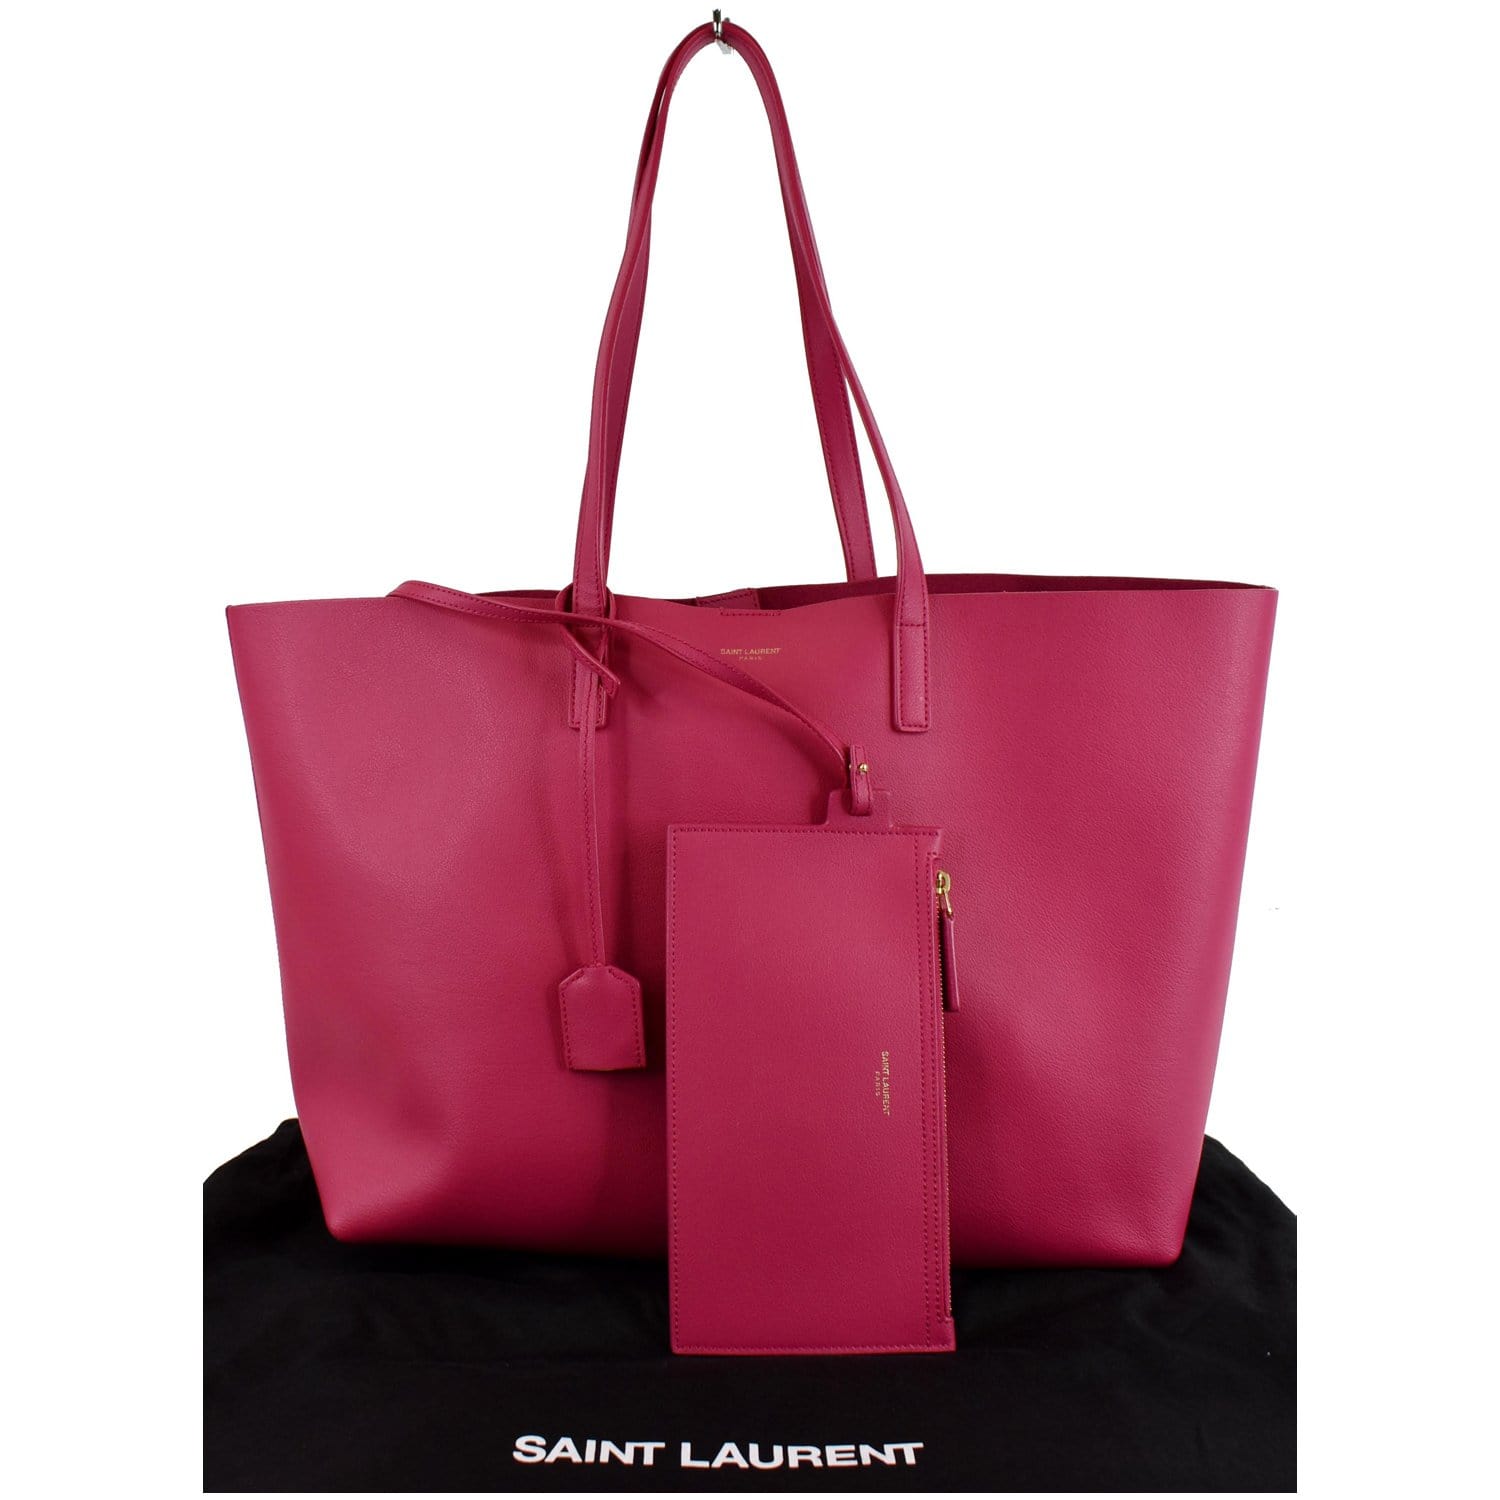 large Shopping tote bag, Saint Laurent